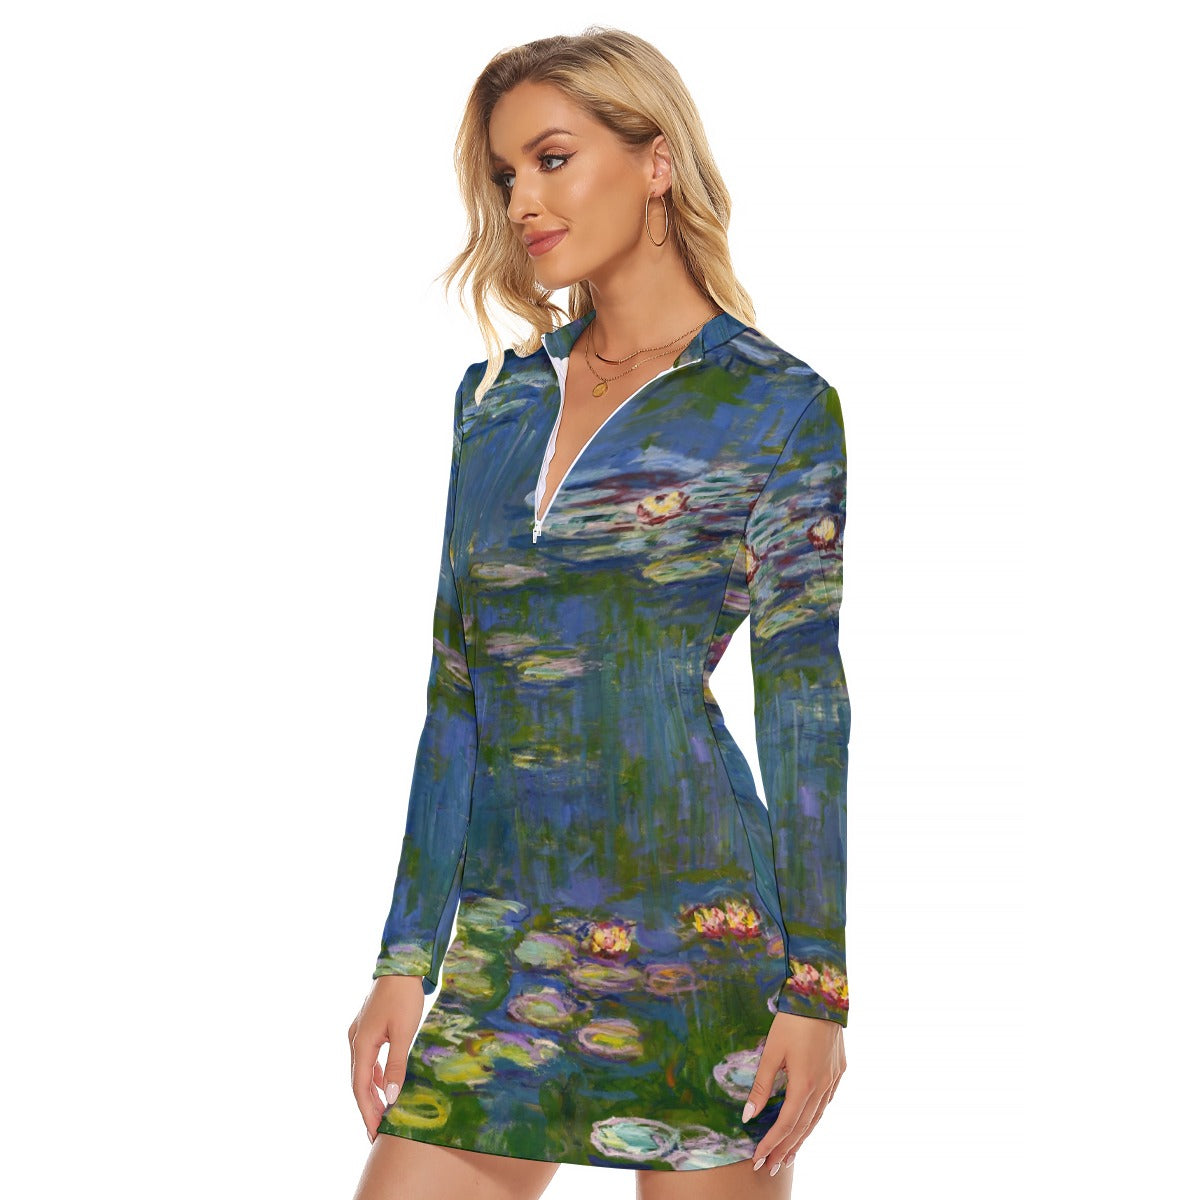 Dreamy Bodycon Dress with Water Lilies Print